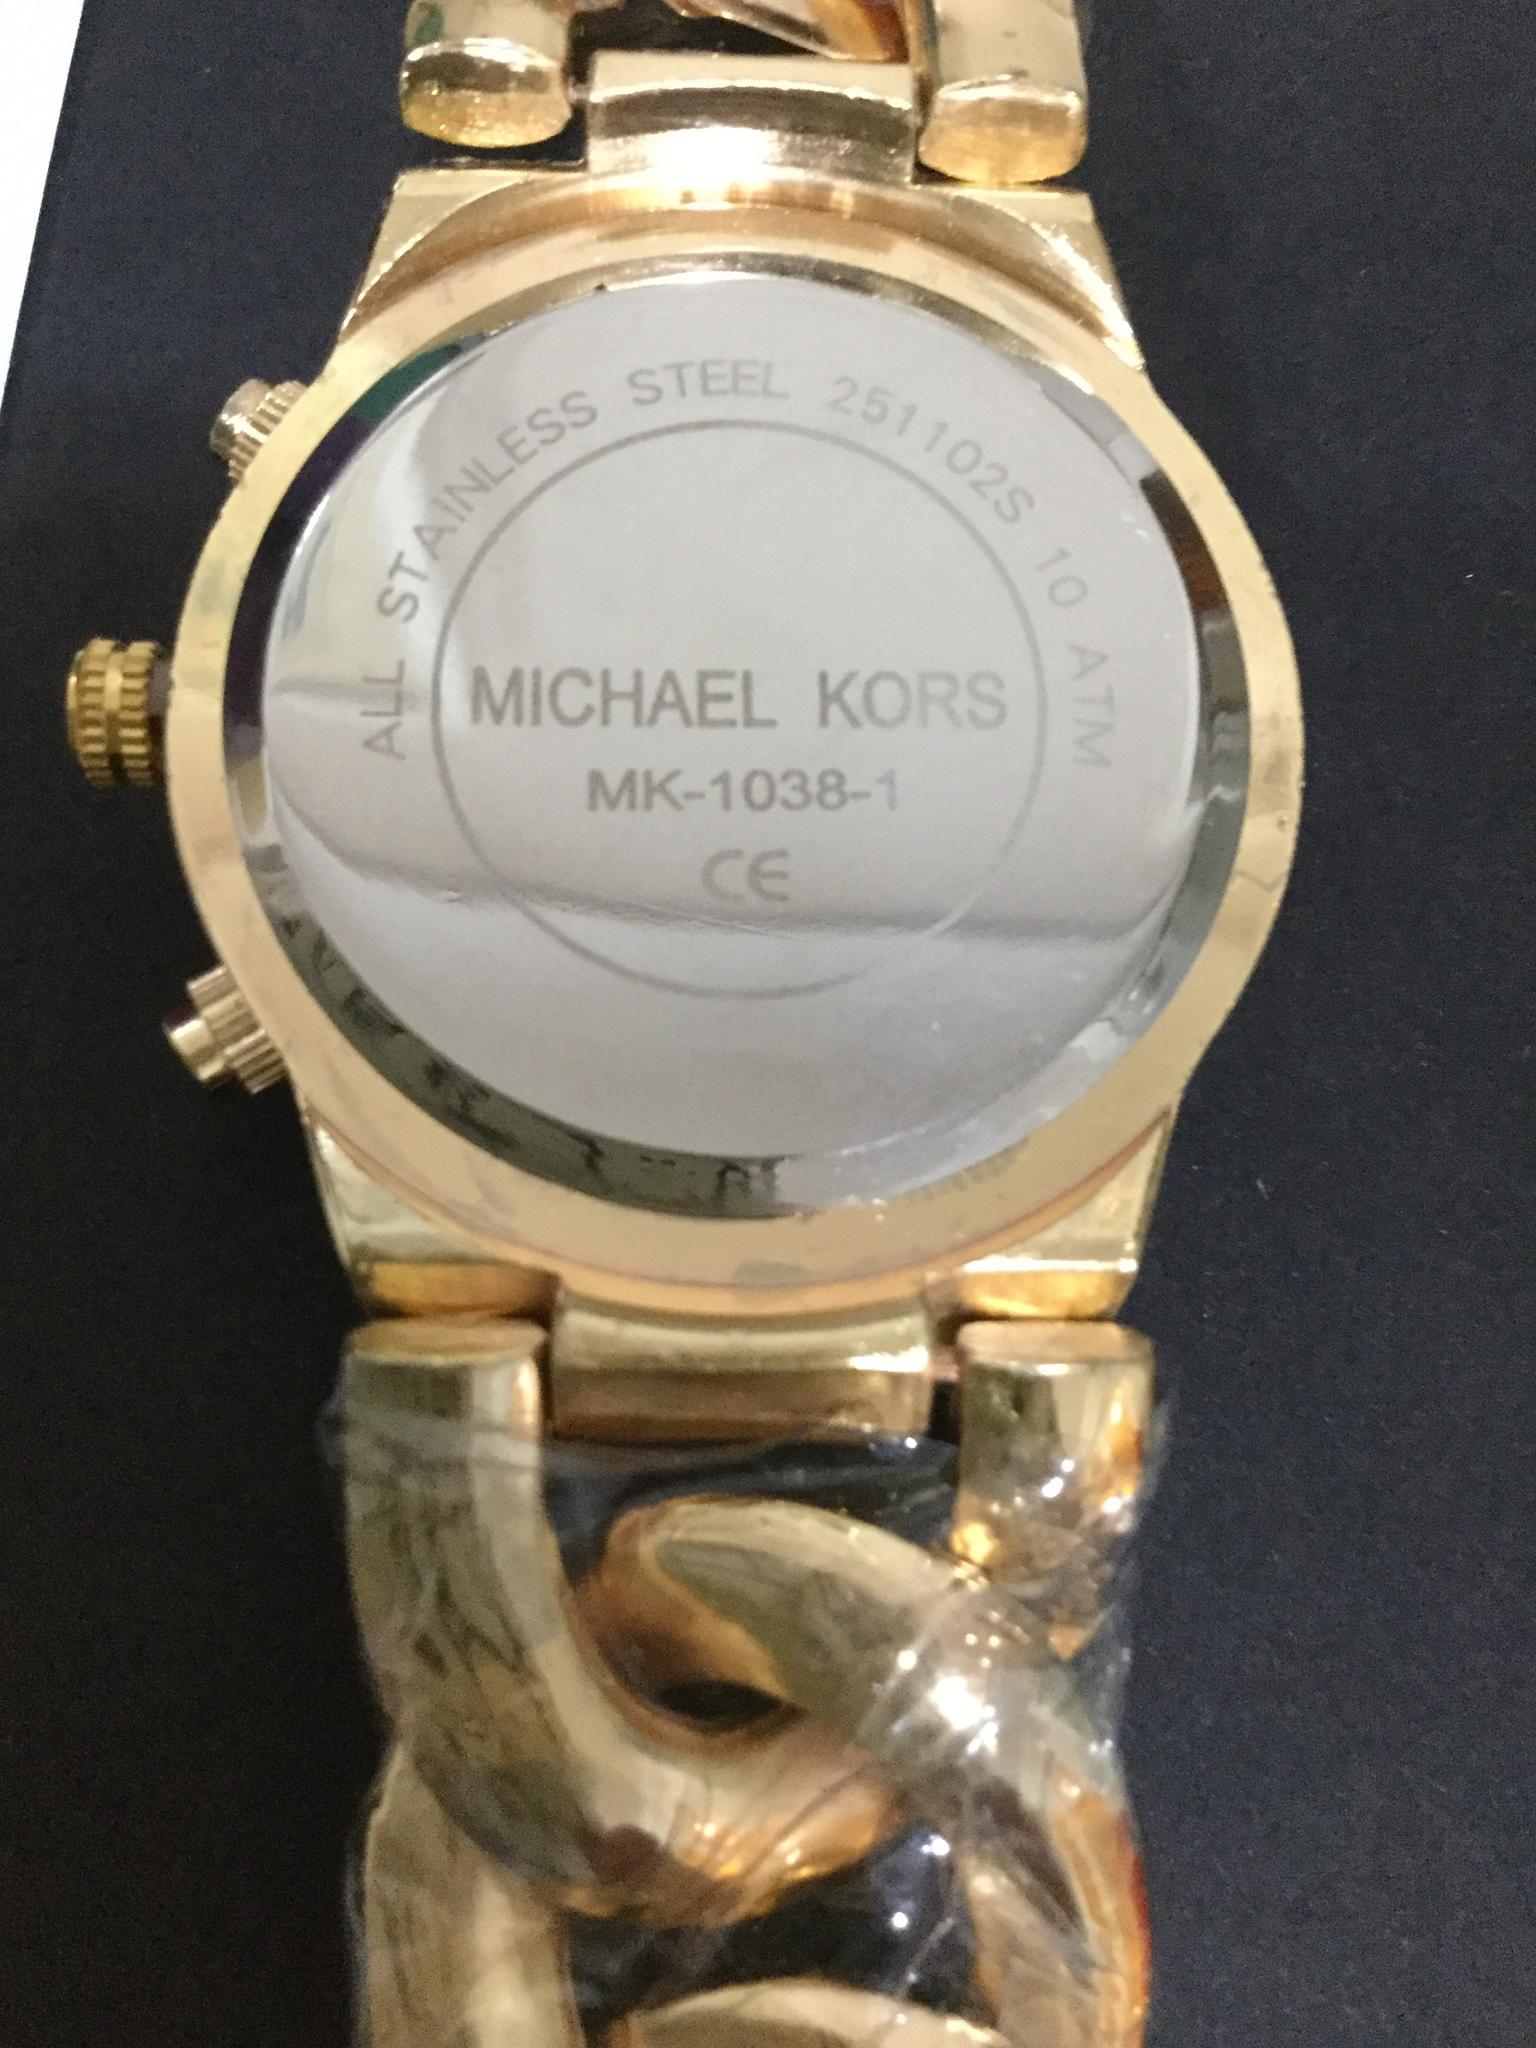 michael kors mk 1038 price